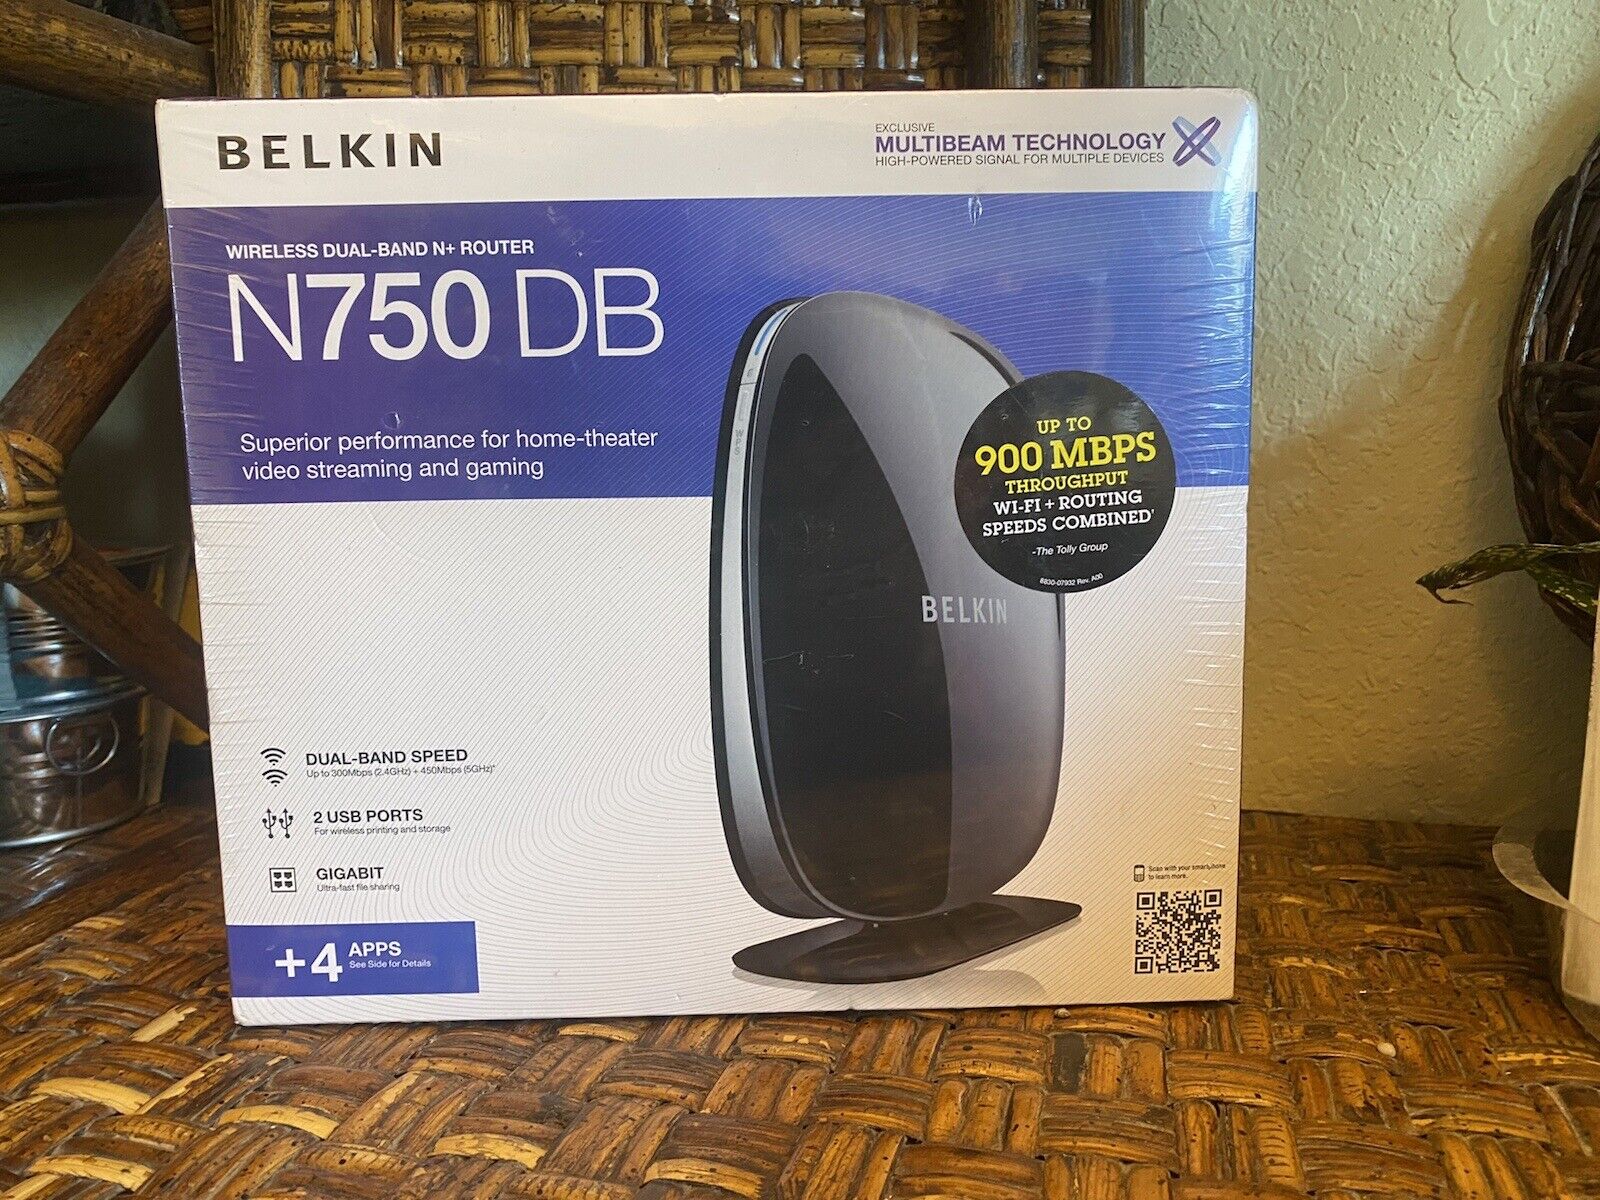 Belkin N750 DB 450 to 900 Mbps 4-Port Gigabit Wireless N Router 2 USB NEW